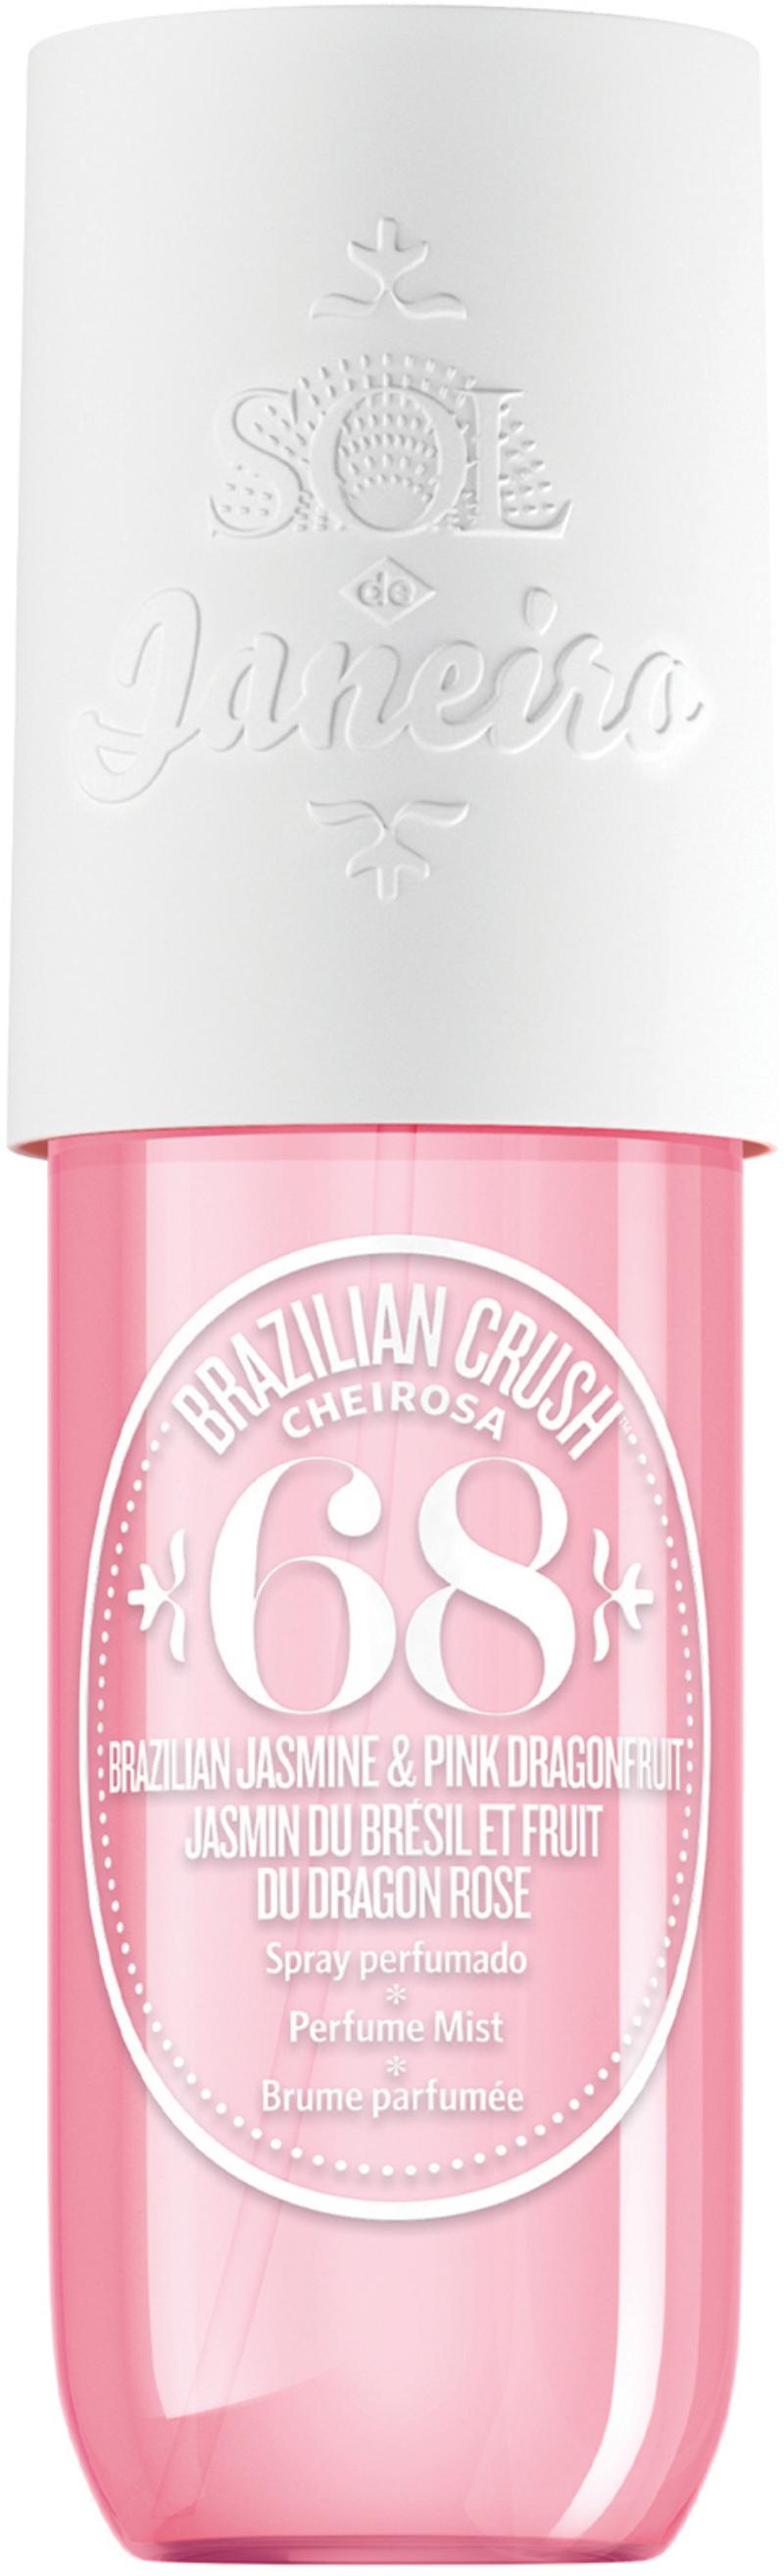 Brazilian Crush Cheirosa &#039;68 Sol de Janeiro perfume - a new  fragrance for women 2022